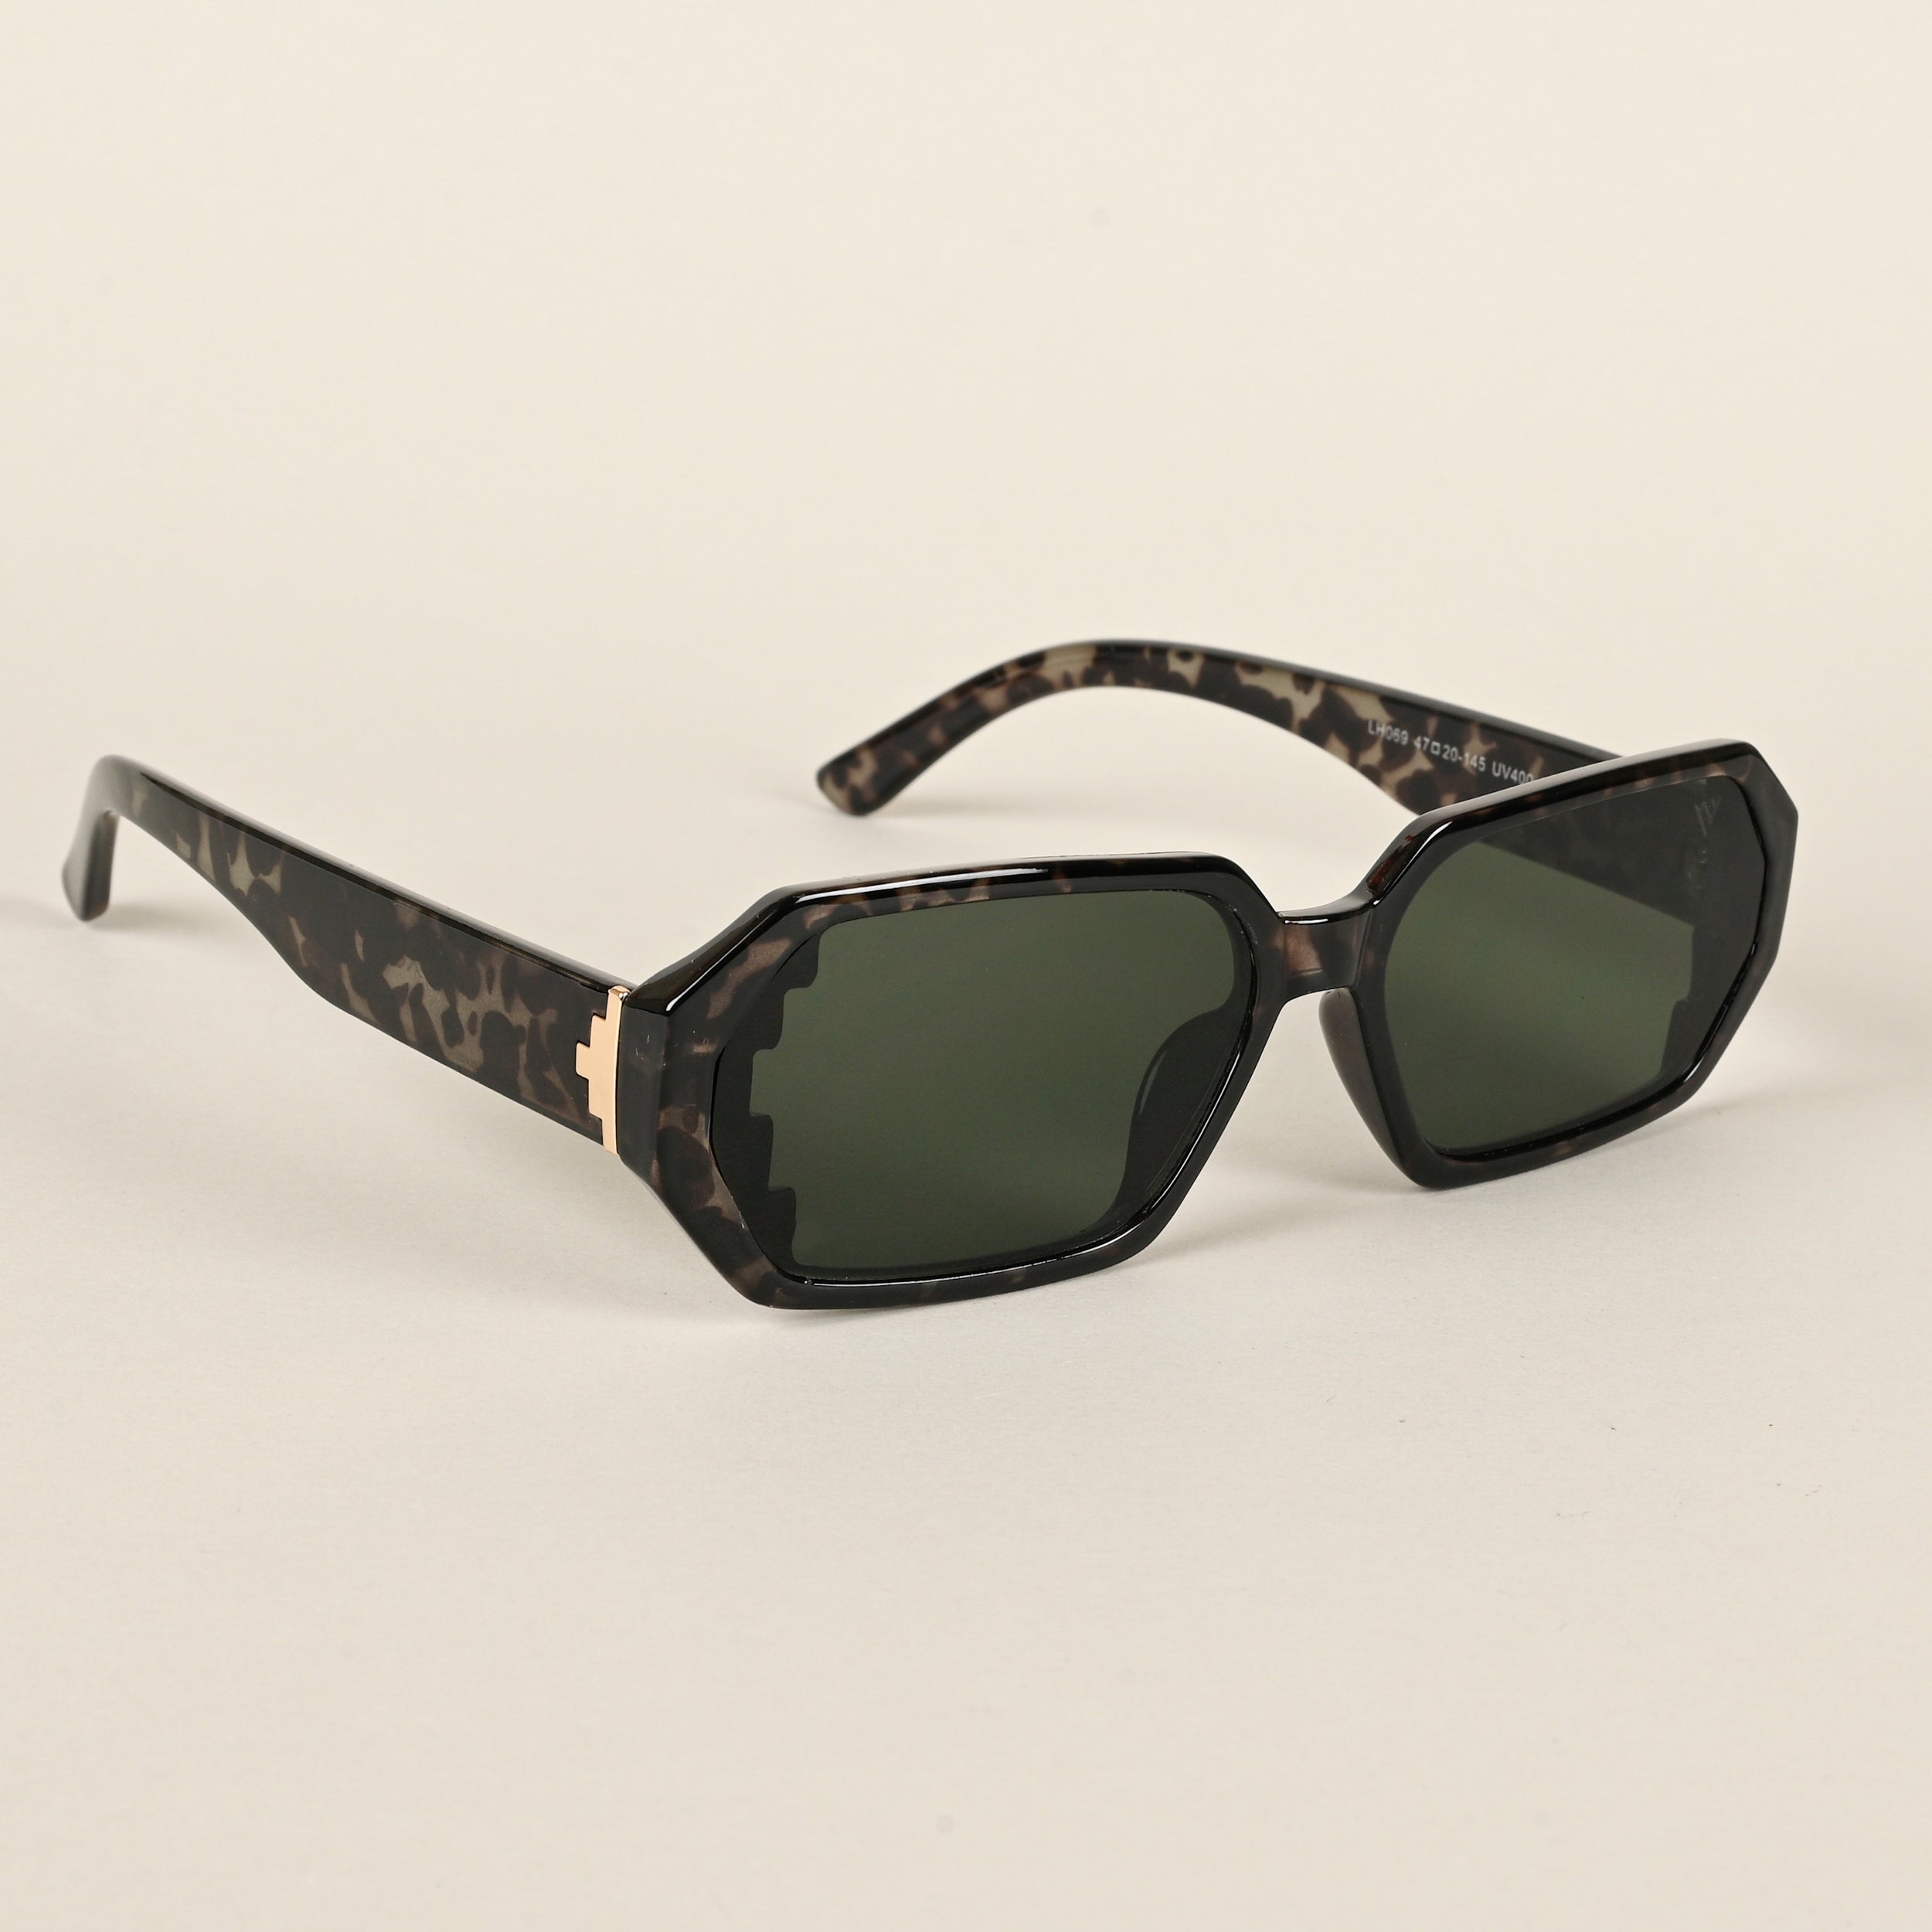 Voyage Green Rectangle Sunglasses for Men & Women - MG4507